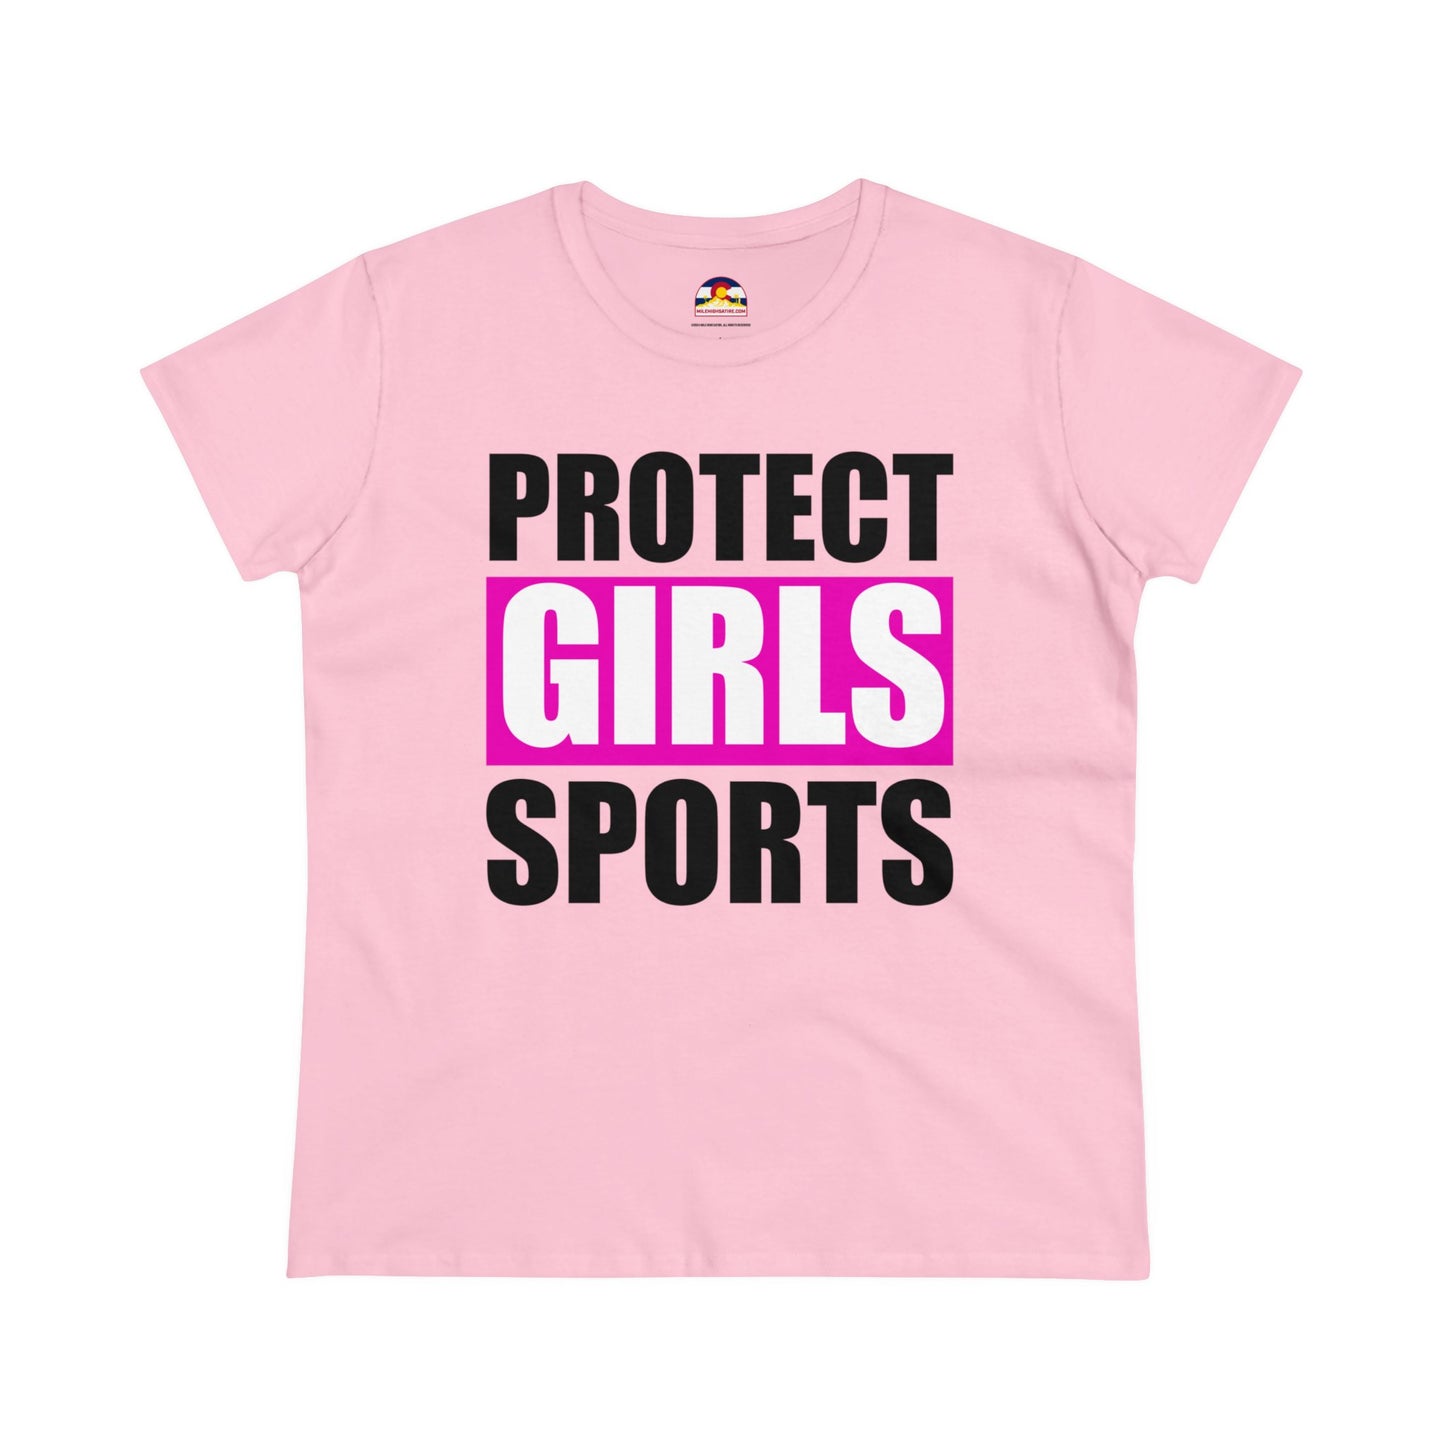 Protect Girls Sports - T-Shirt